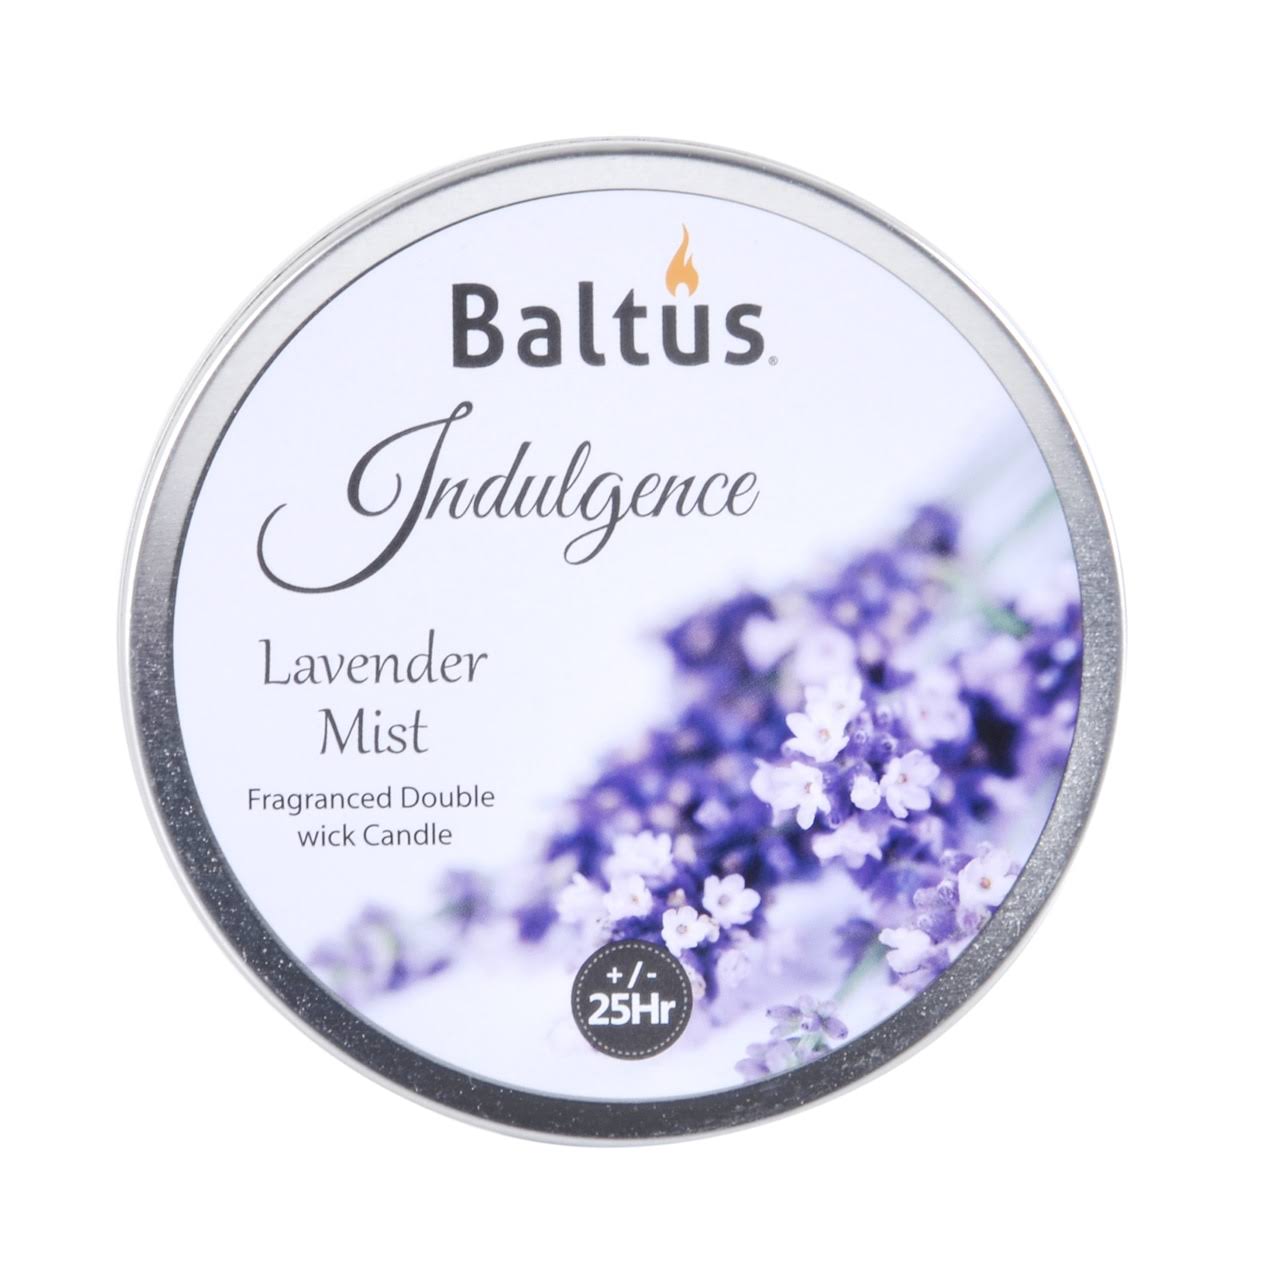 Baltus Indulgence Tin Candle - Lavender Mist